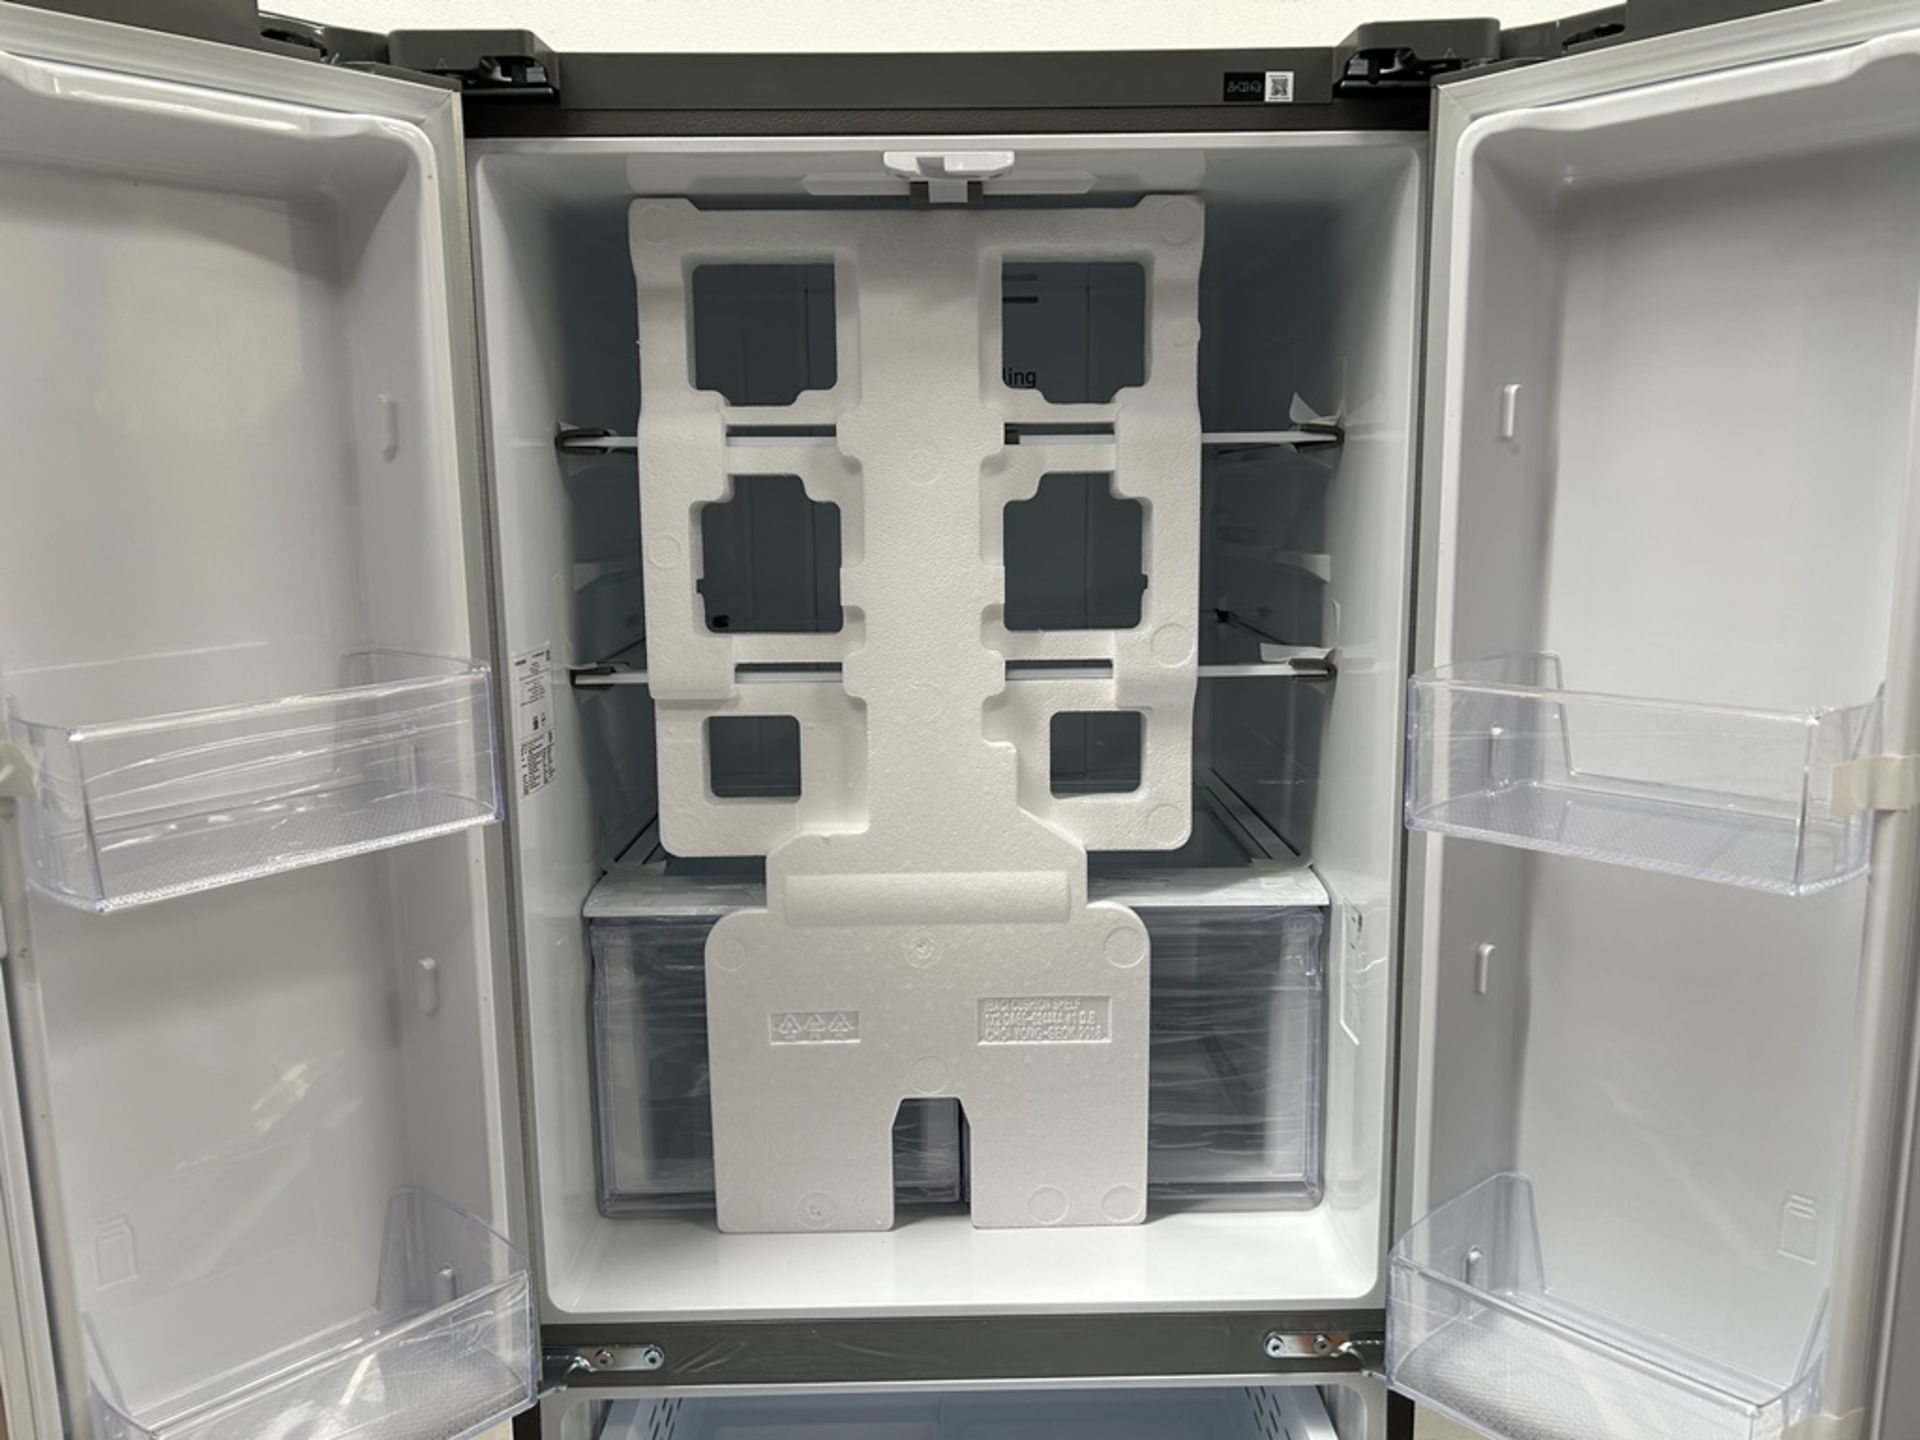 (NUEVO) Refrigerador Marca SAMSUNG, Modelo RF22A4010S9, Serie 01874K, Color GRIS - Image 5 of 11